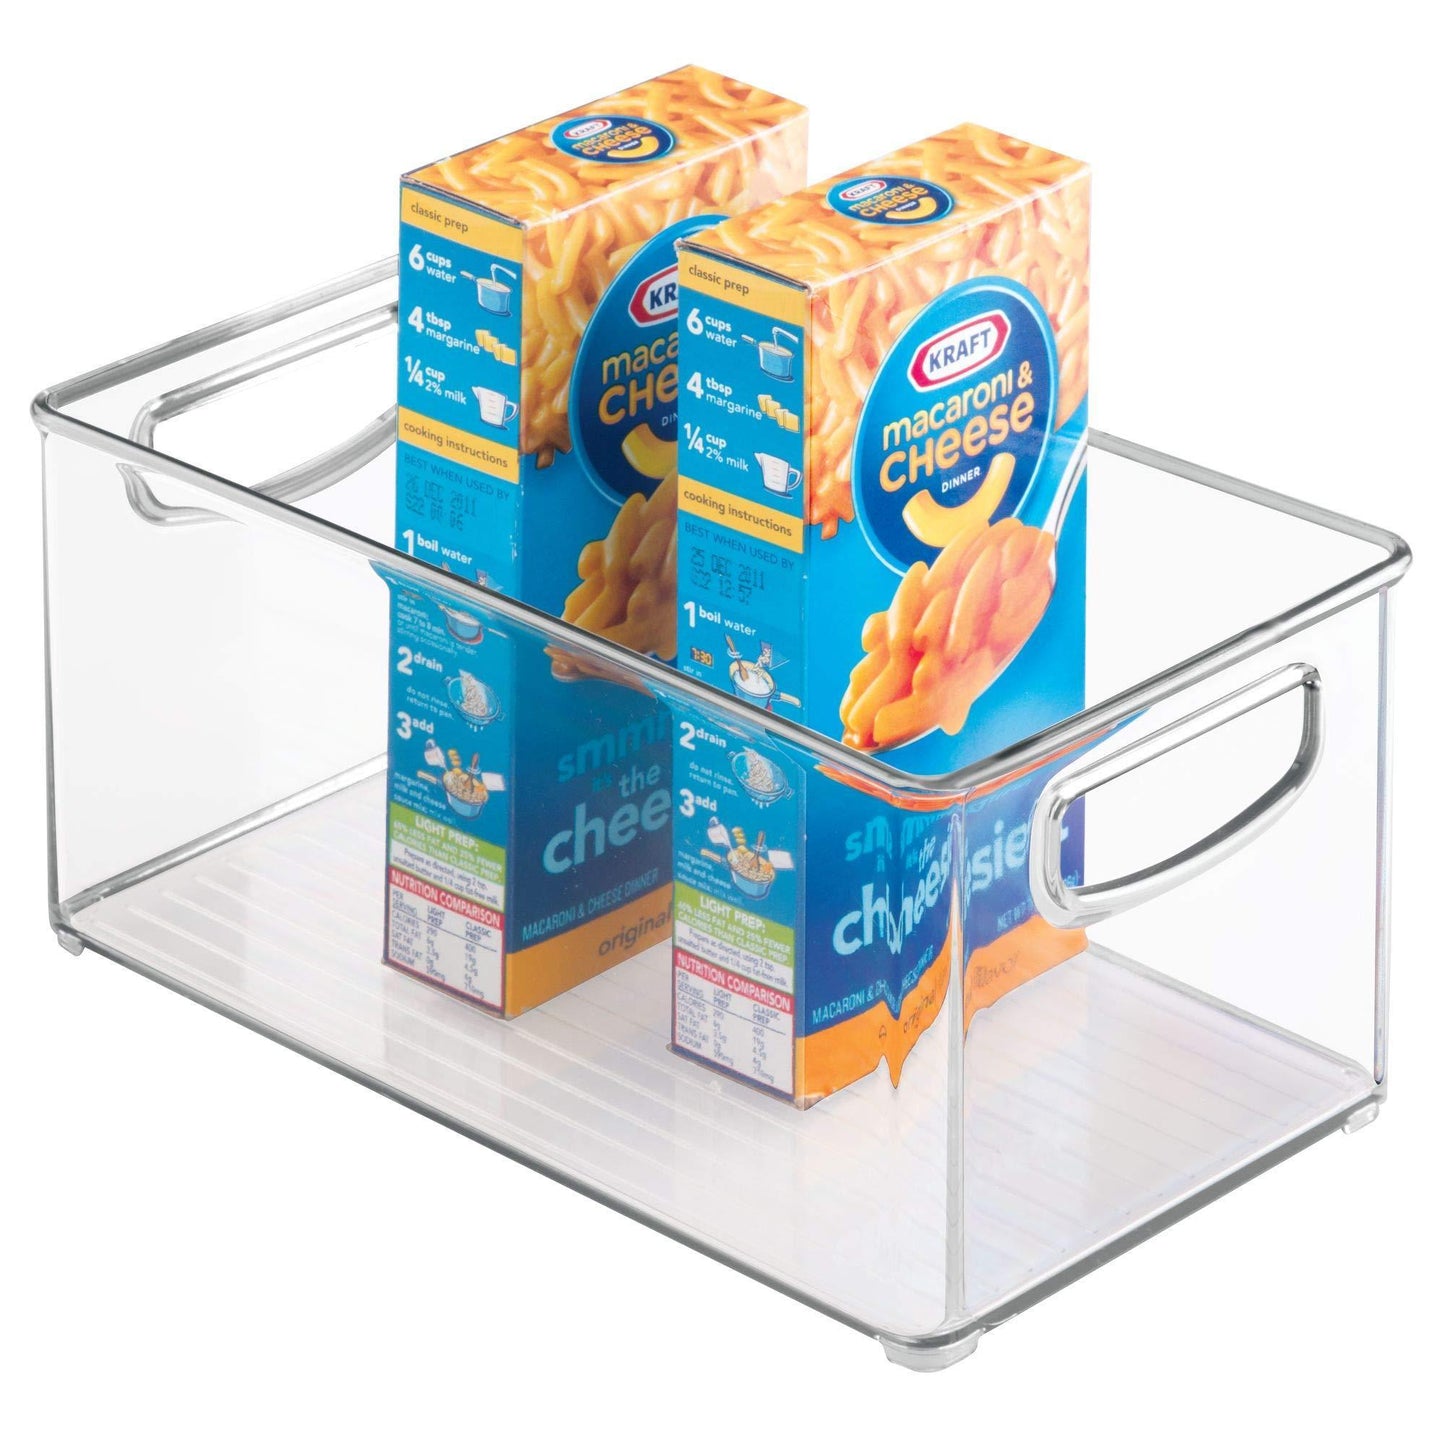 Budget idesign plastic storage bin with handles for kitchen fridge freezer pantry and cabinet organization bpa free set clear